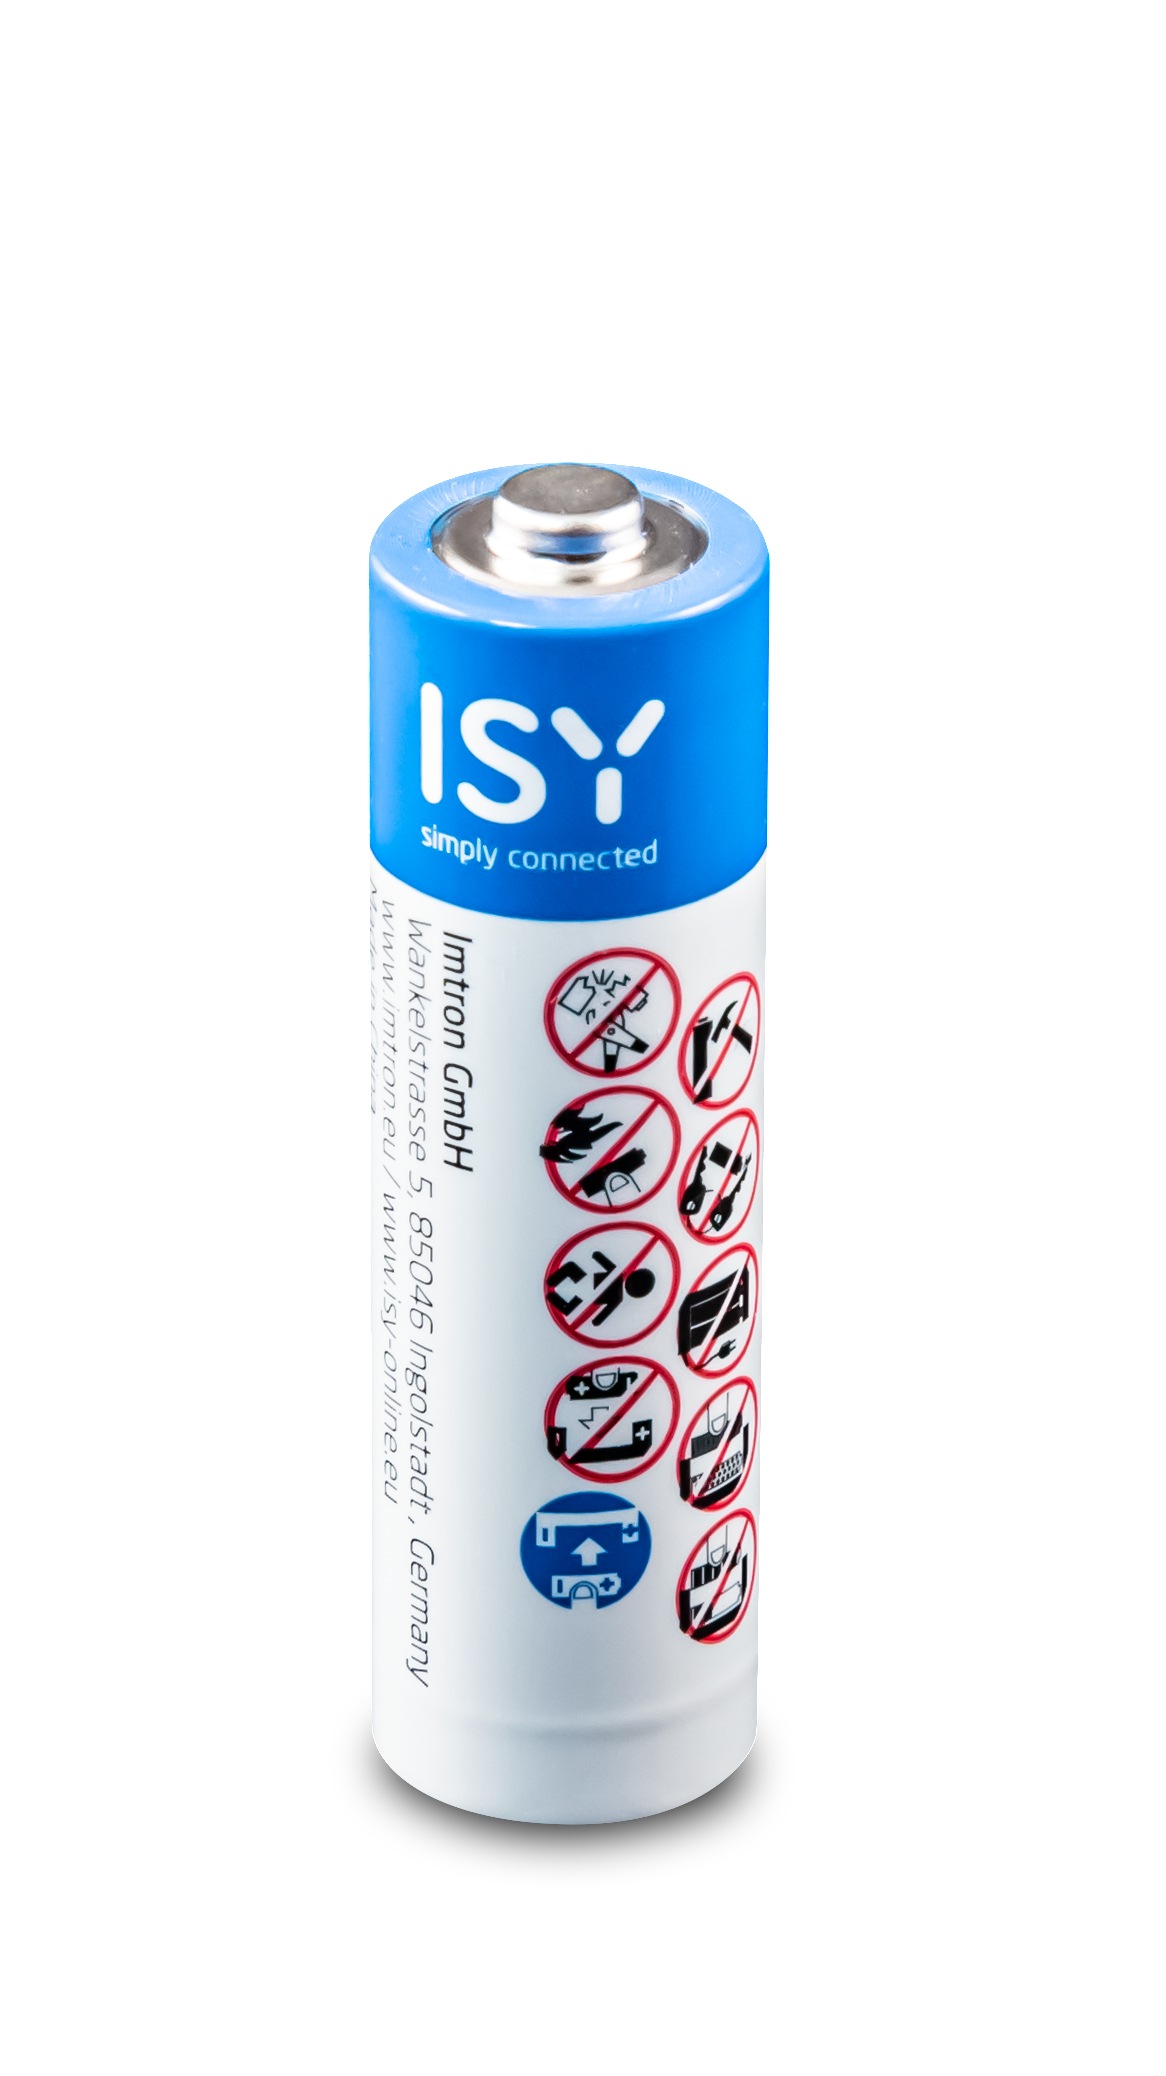 1.5 Volt 50 Batterie, Stück IBA-2050 AA ISY